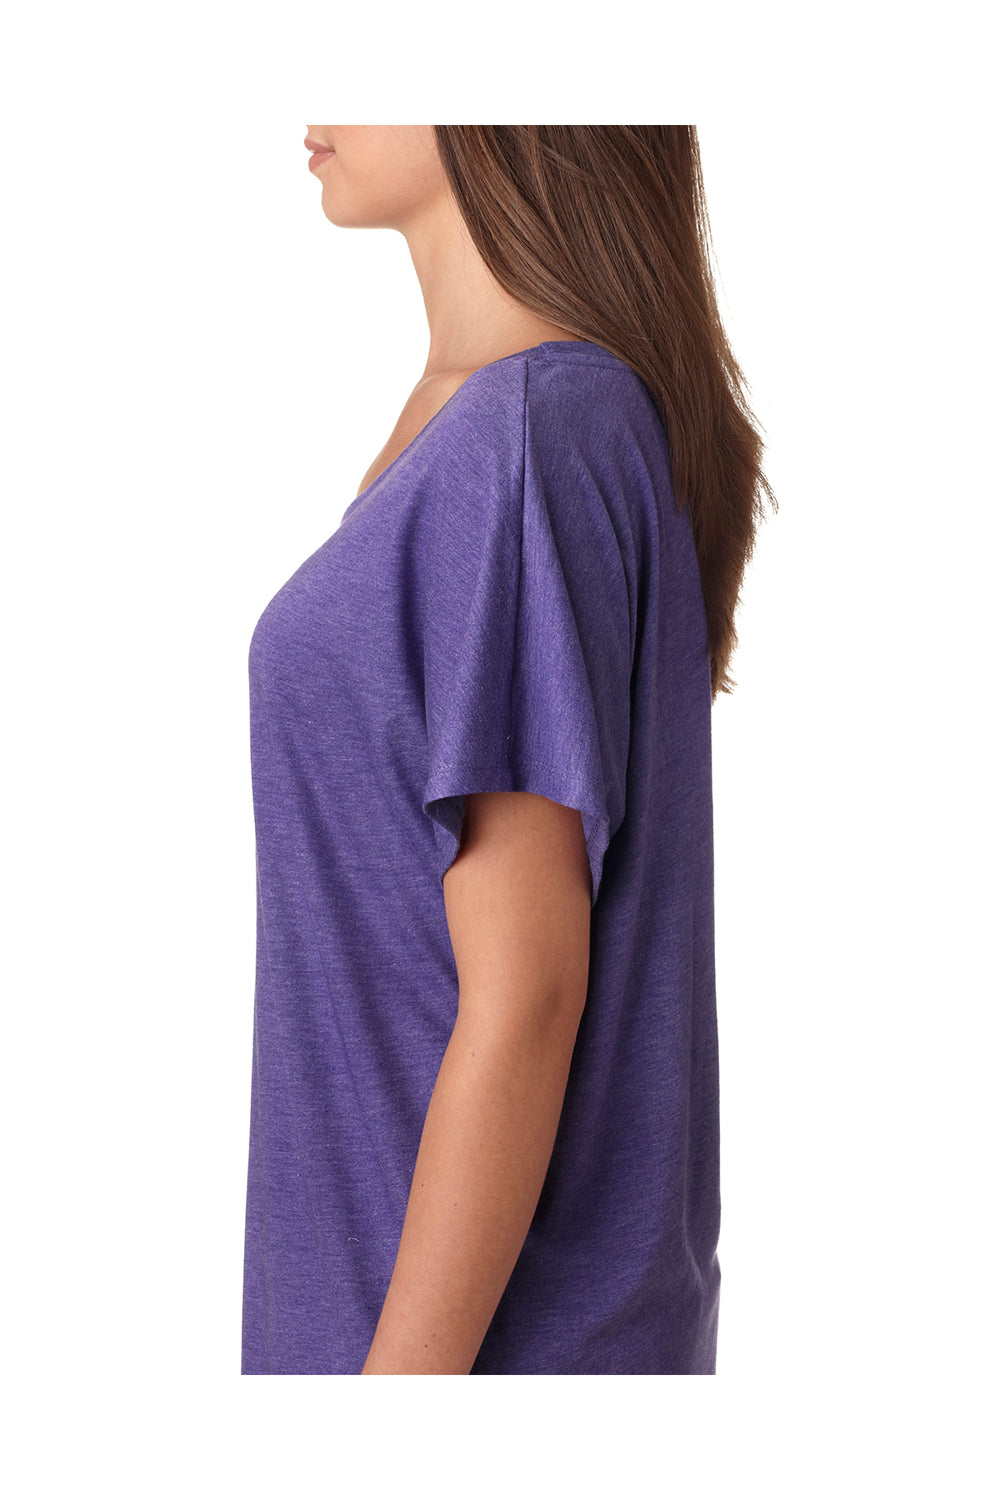 Next Level 6760 Womens Dolman Jersey Short Sleeve Scoop Neck T-Shirt Purple Rush Side